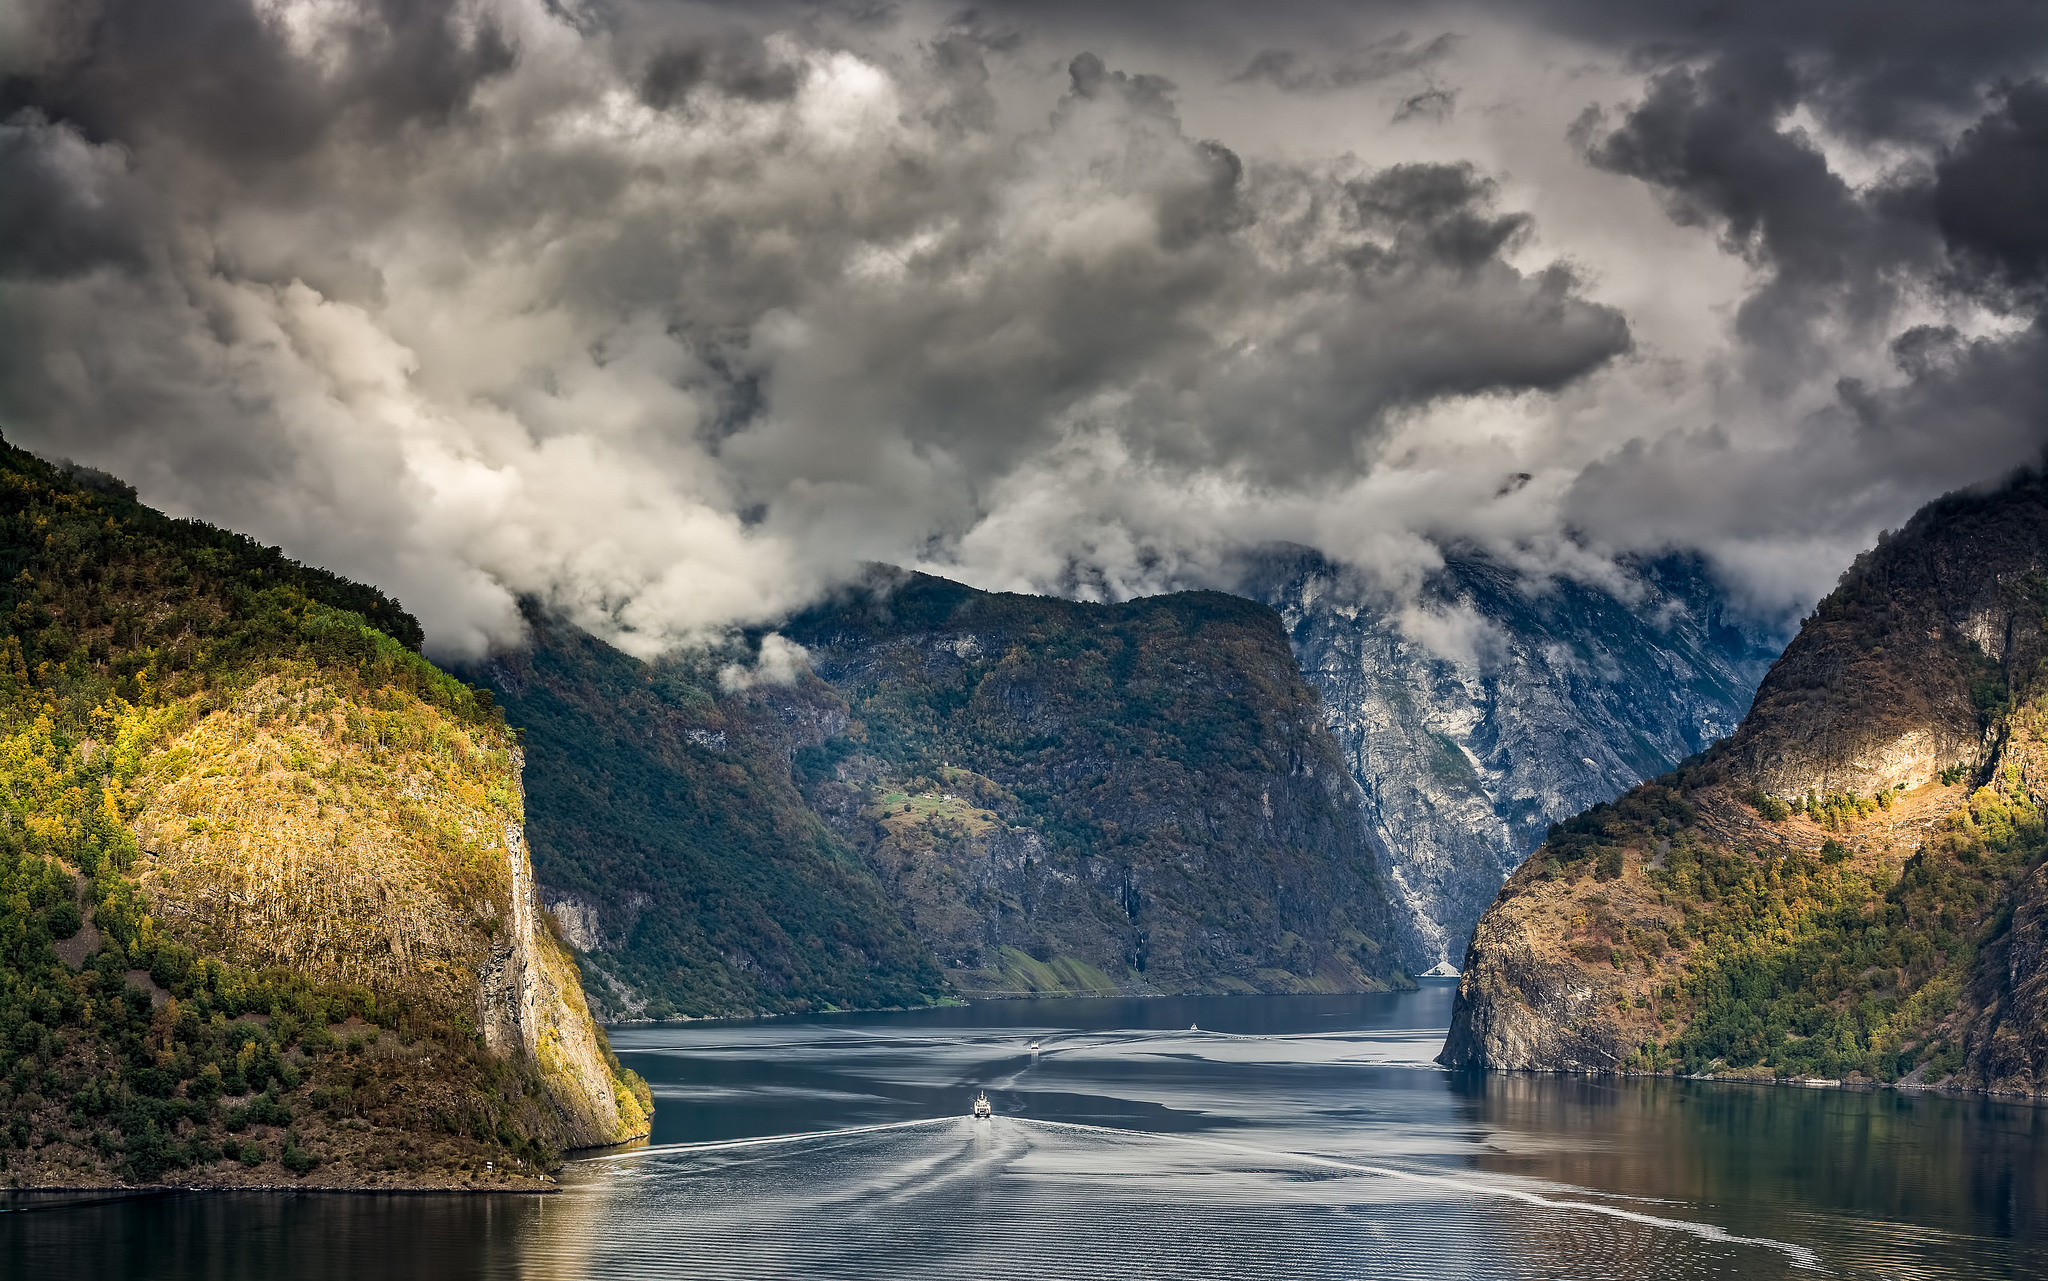 851924 descargar imagen tierra/naturaleza, fiordo, nube, montaña, noruega, nærøyfjord, barco: fondos de pantalla y protectores de pantalla gratis